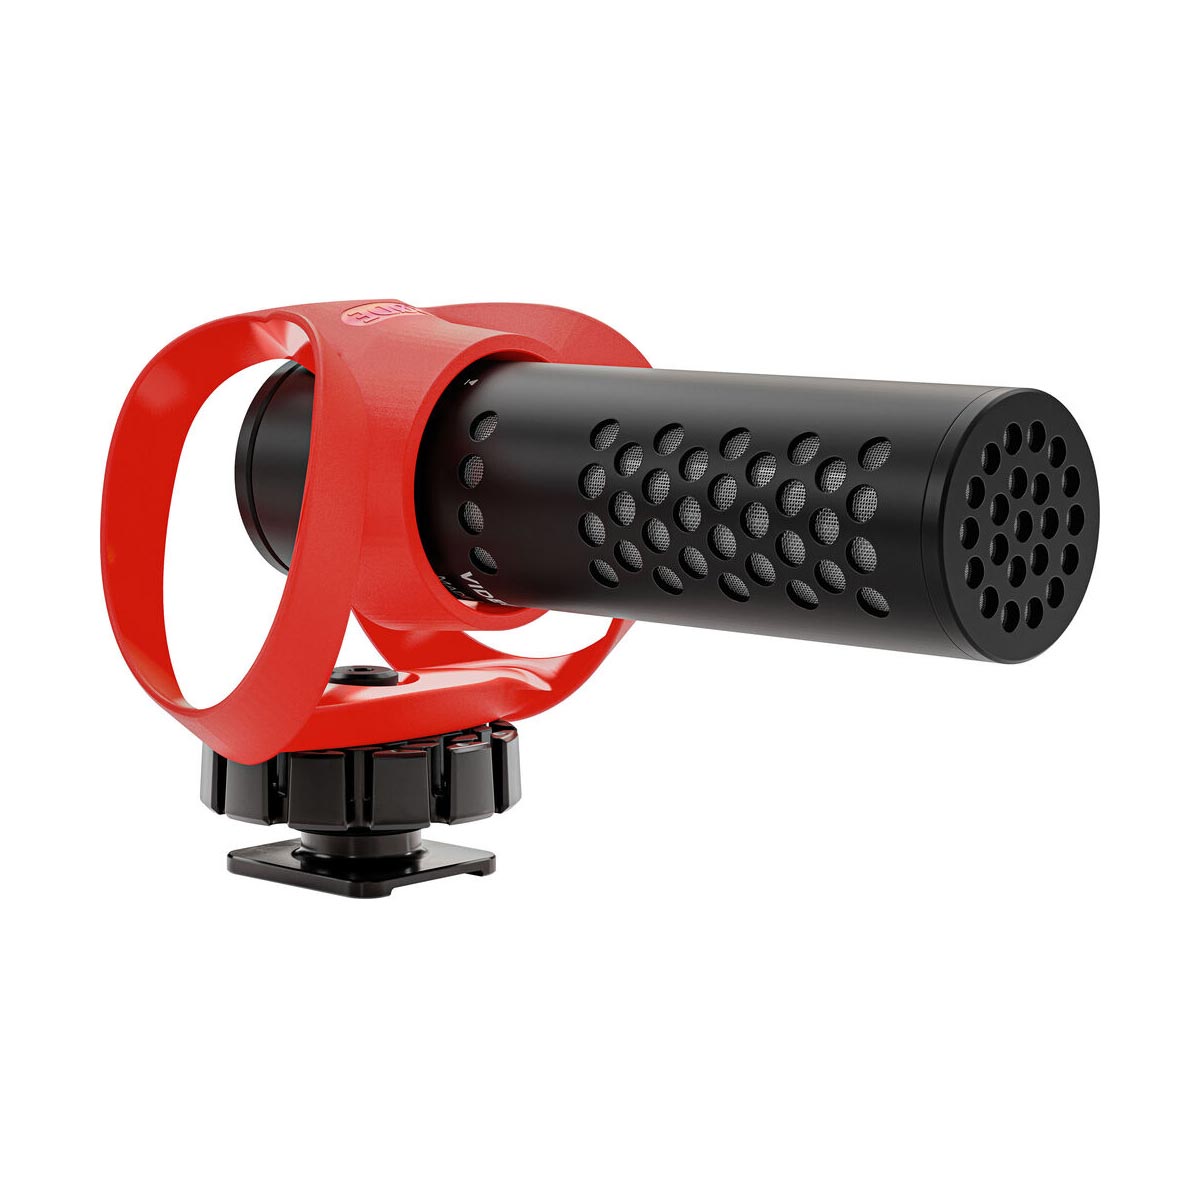 RODE VideoMicro II Ultra-compact On-camera Microphone